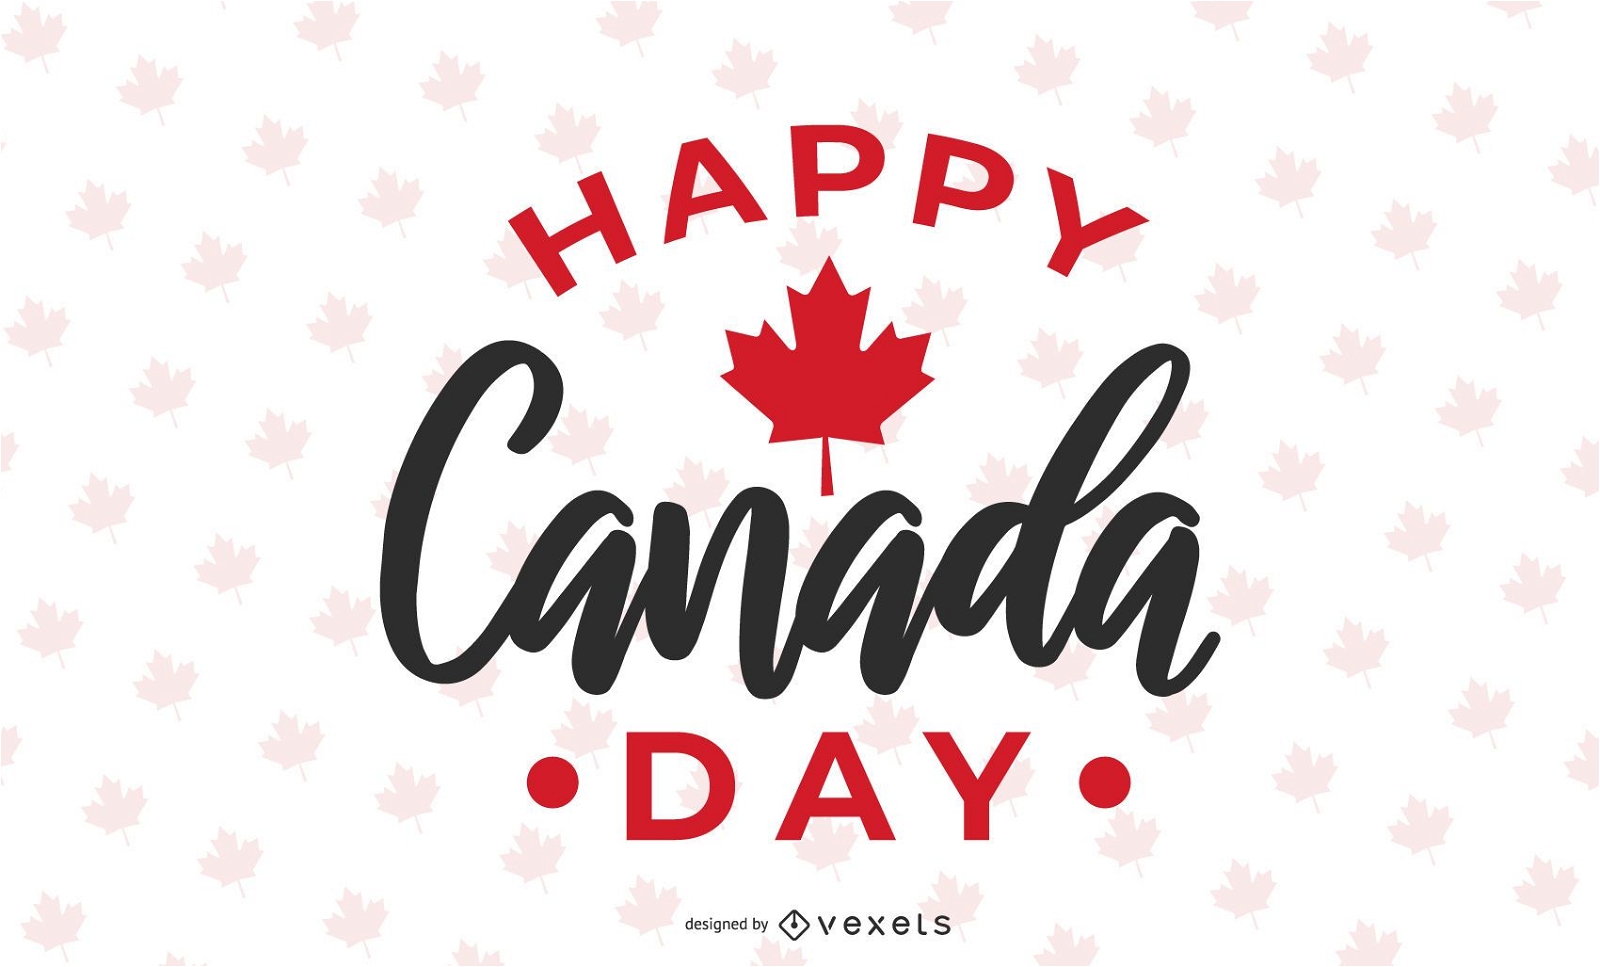 Happy Canada Day Design 